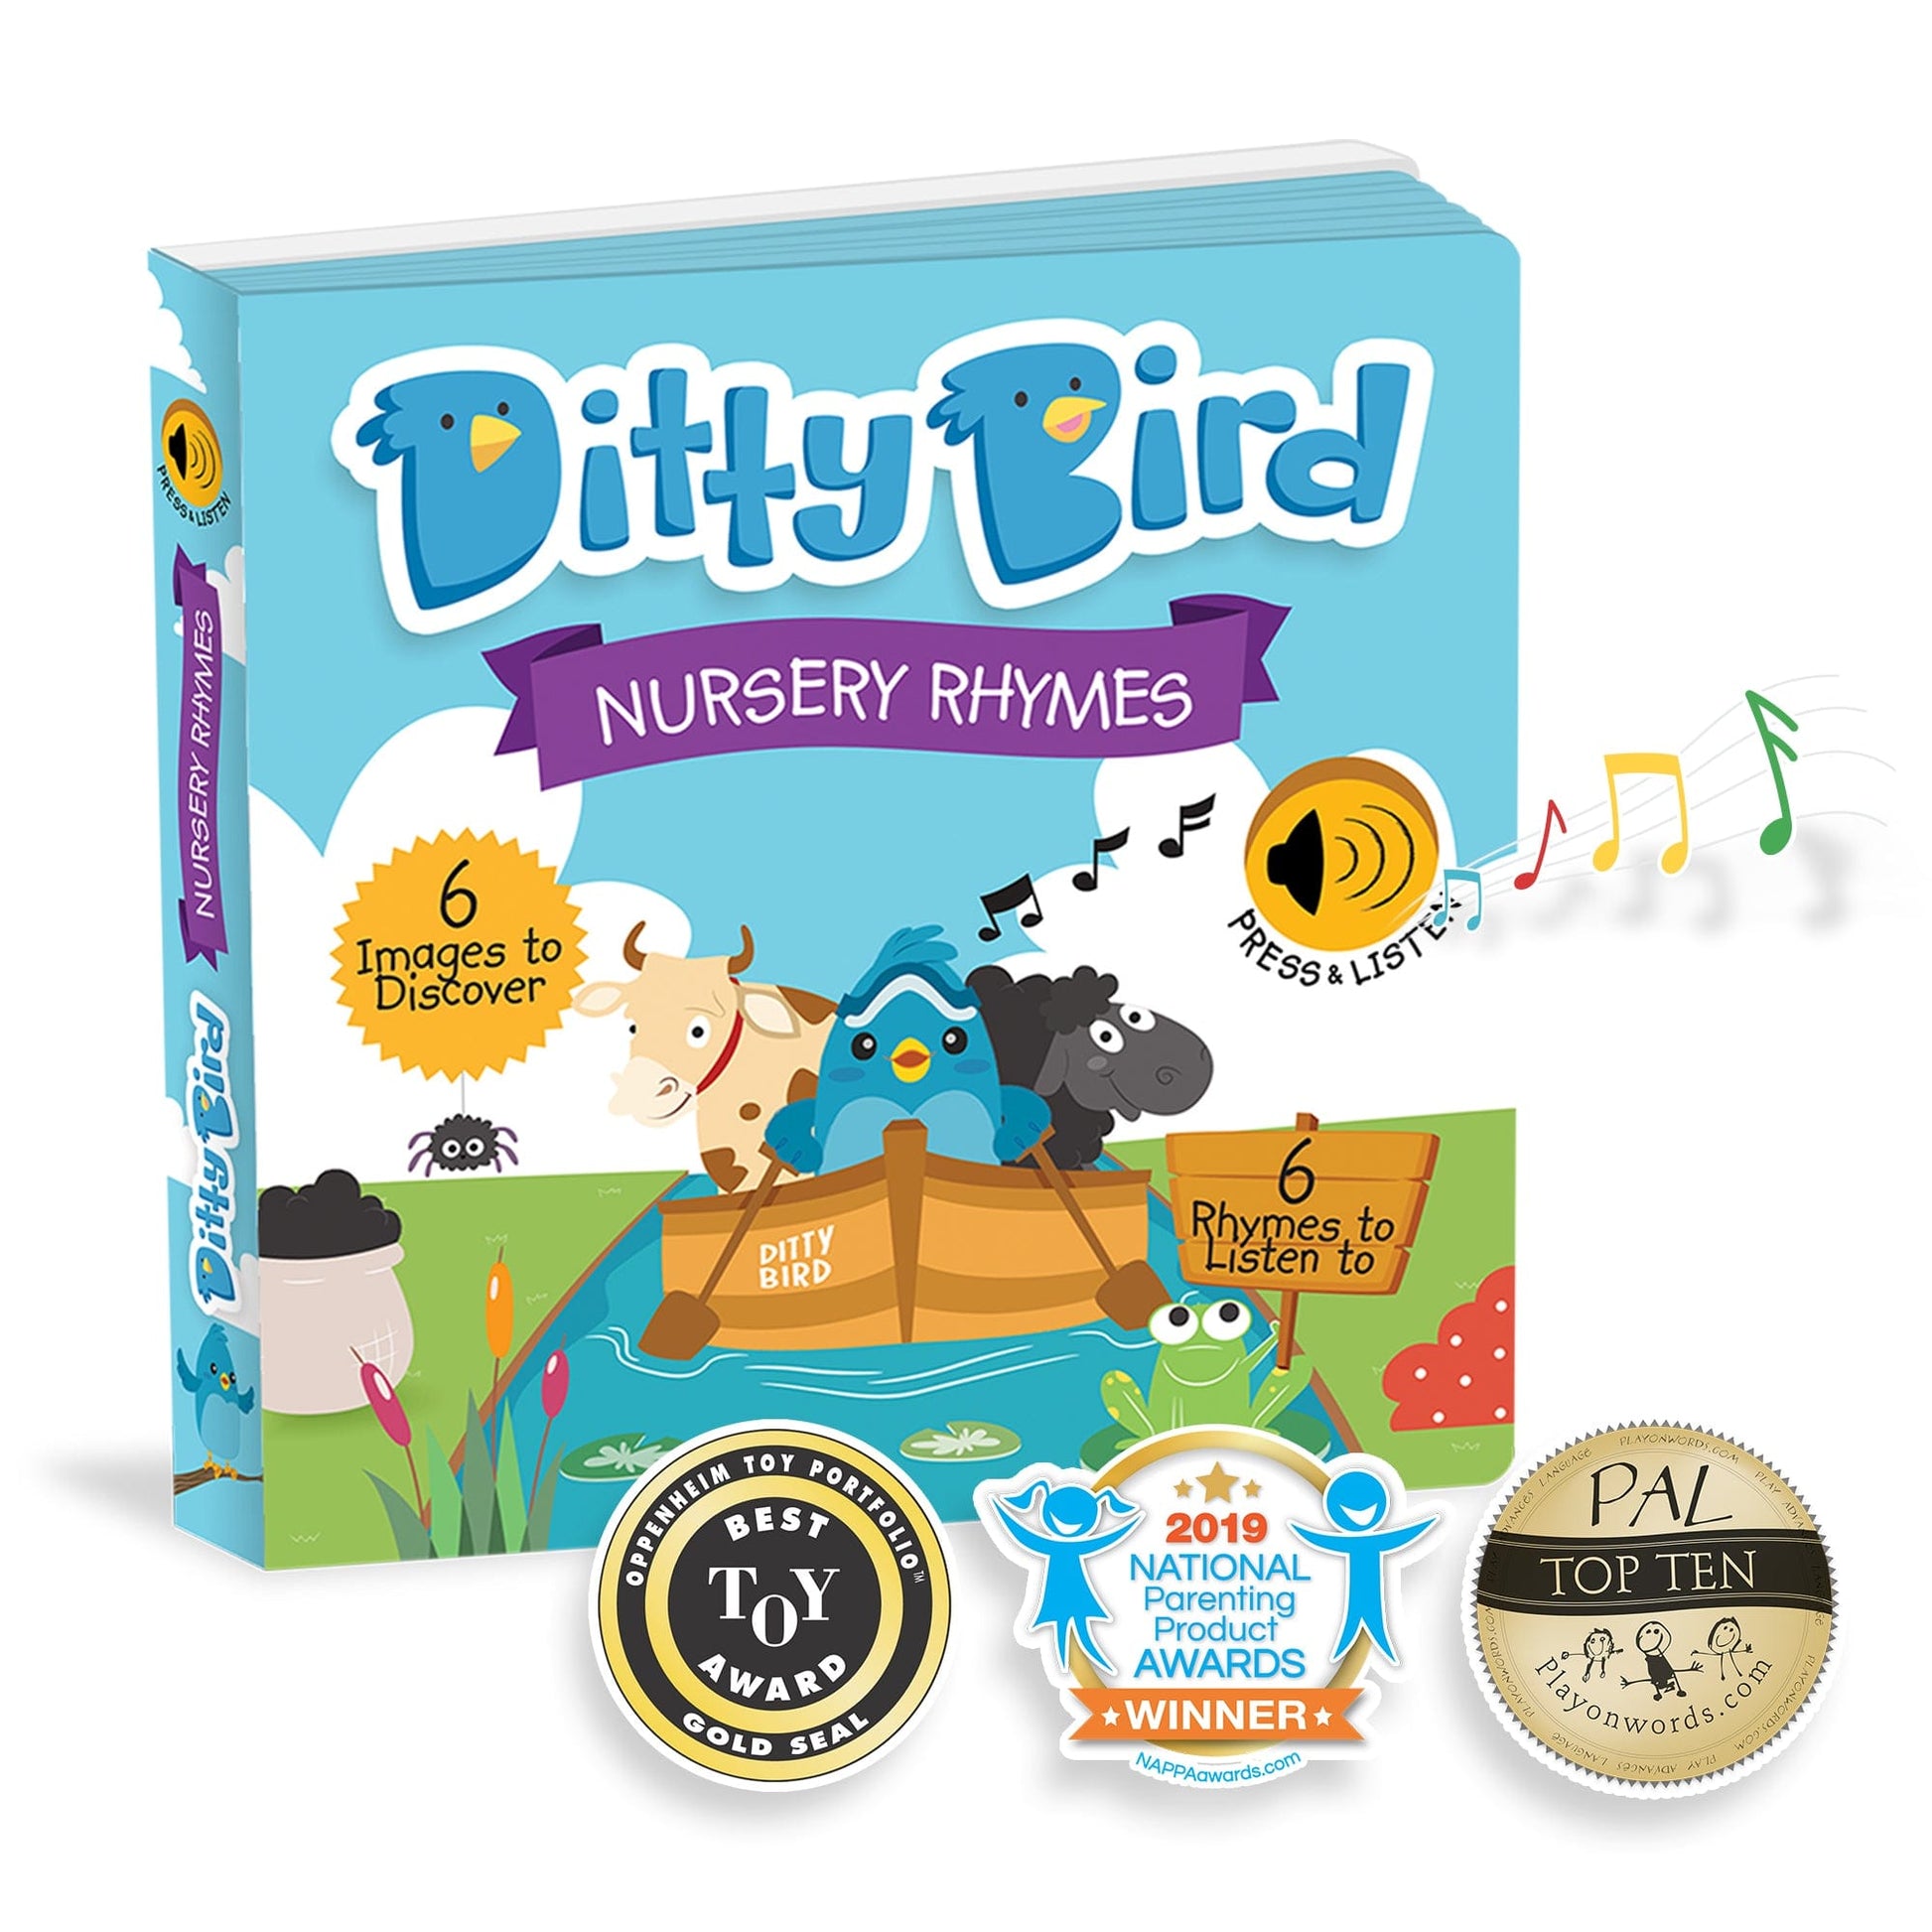 Ditty Bird Nursery Rhymes Musical Book Ditty Bird Nursery Rhymes Musical Book 